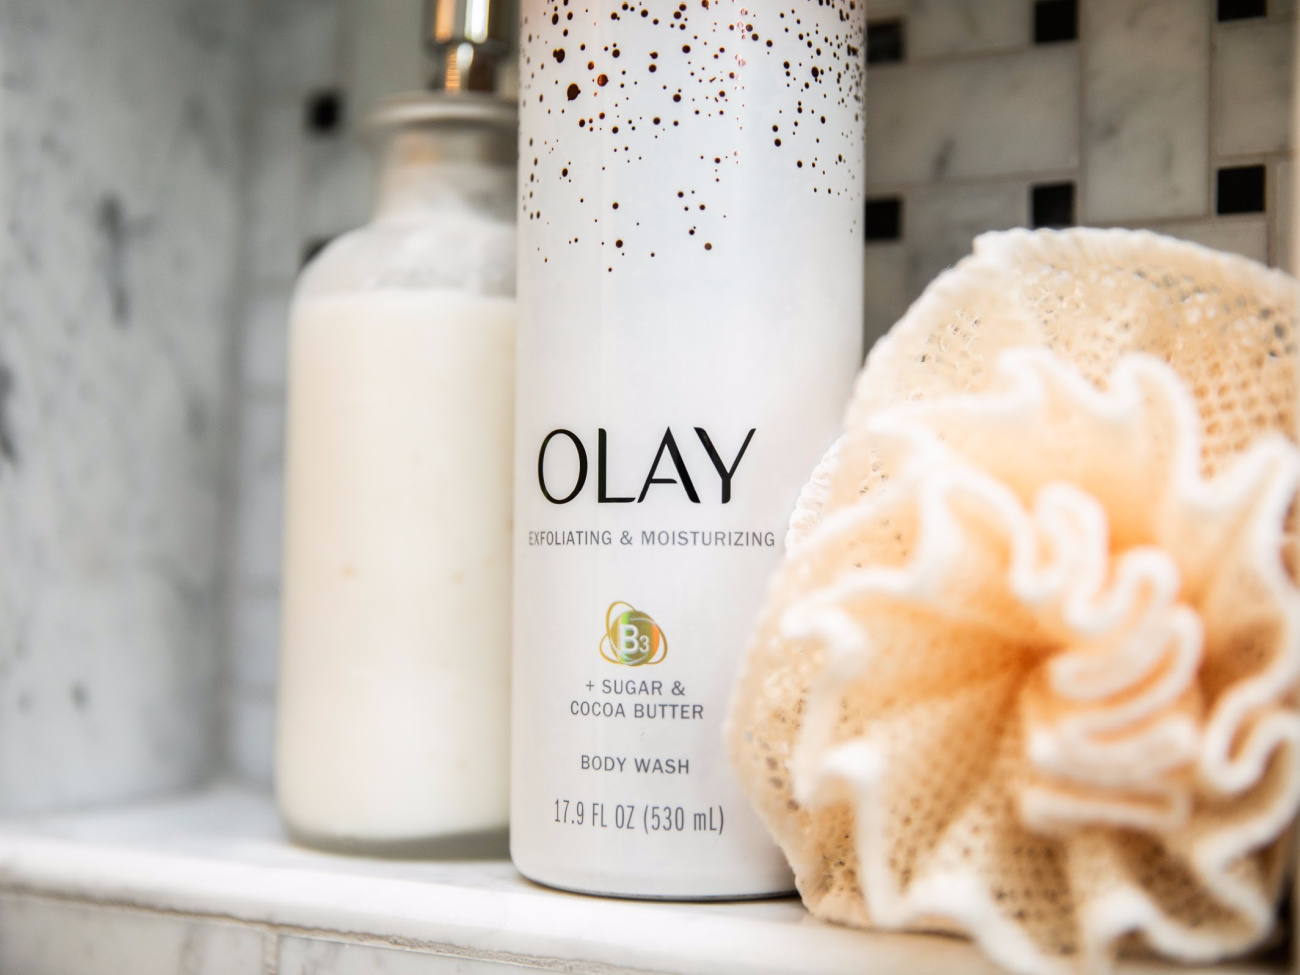 Get Olay Premium Body Wash For Just $5.99 At Kroger (Regular Price $10.49)